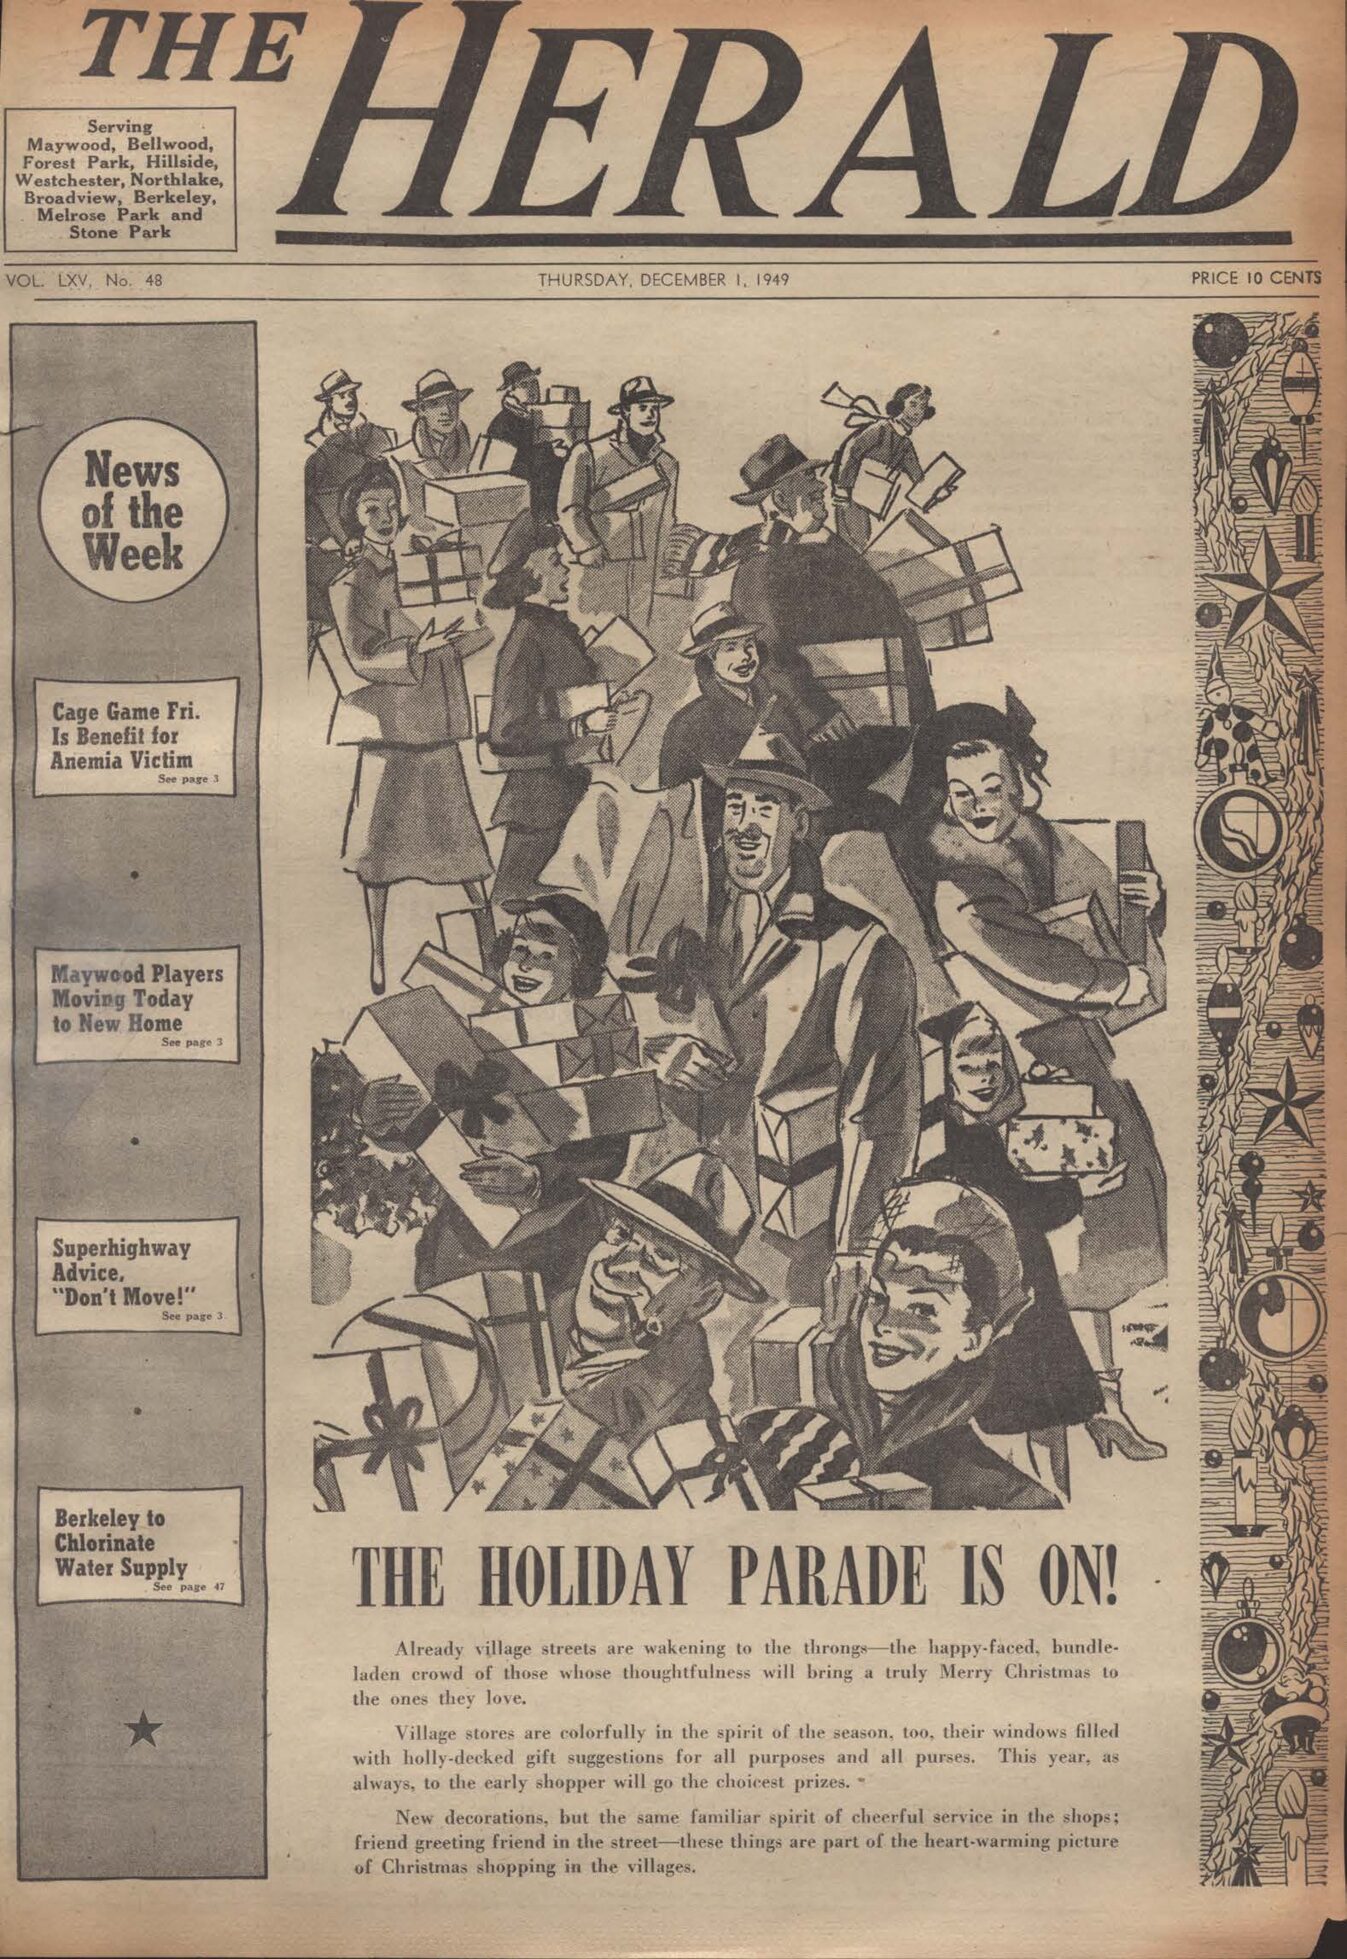 The Herald – 19491201